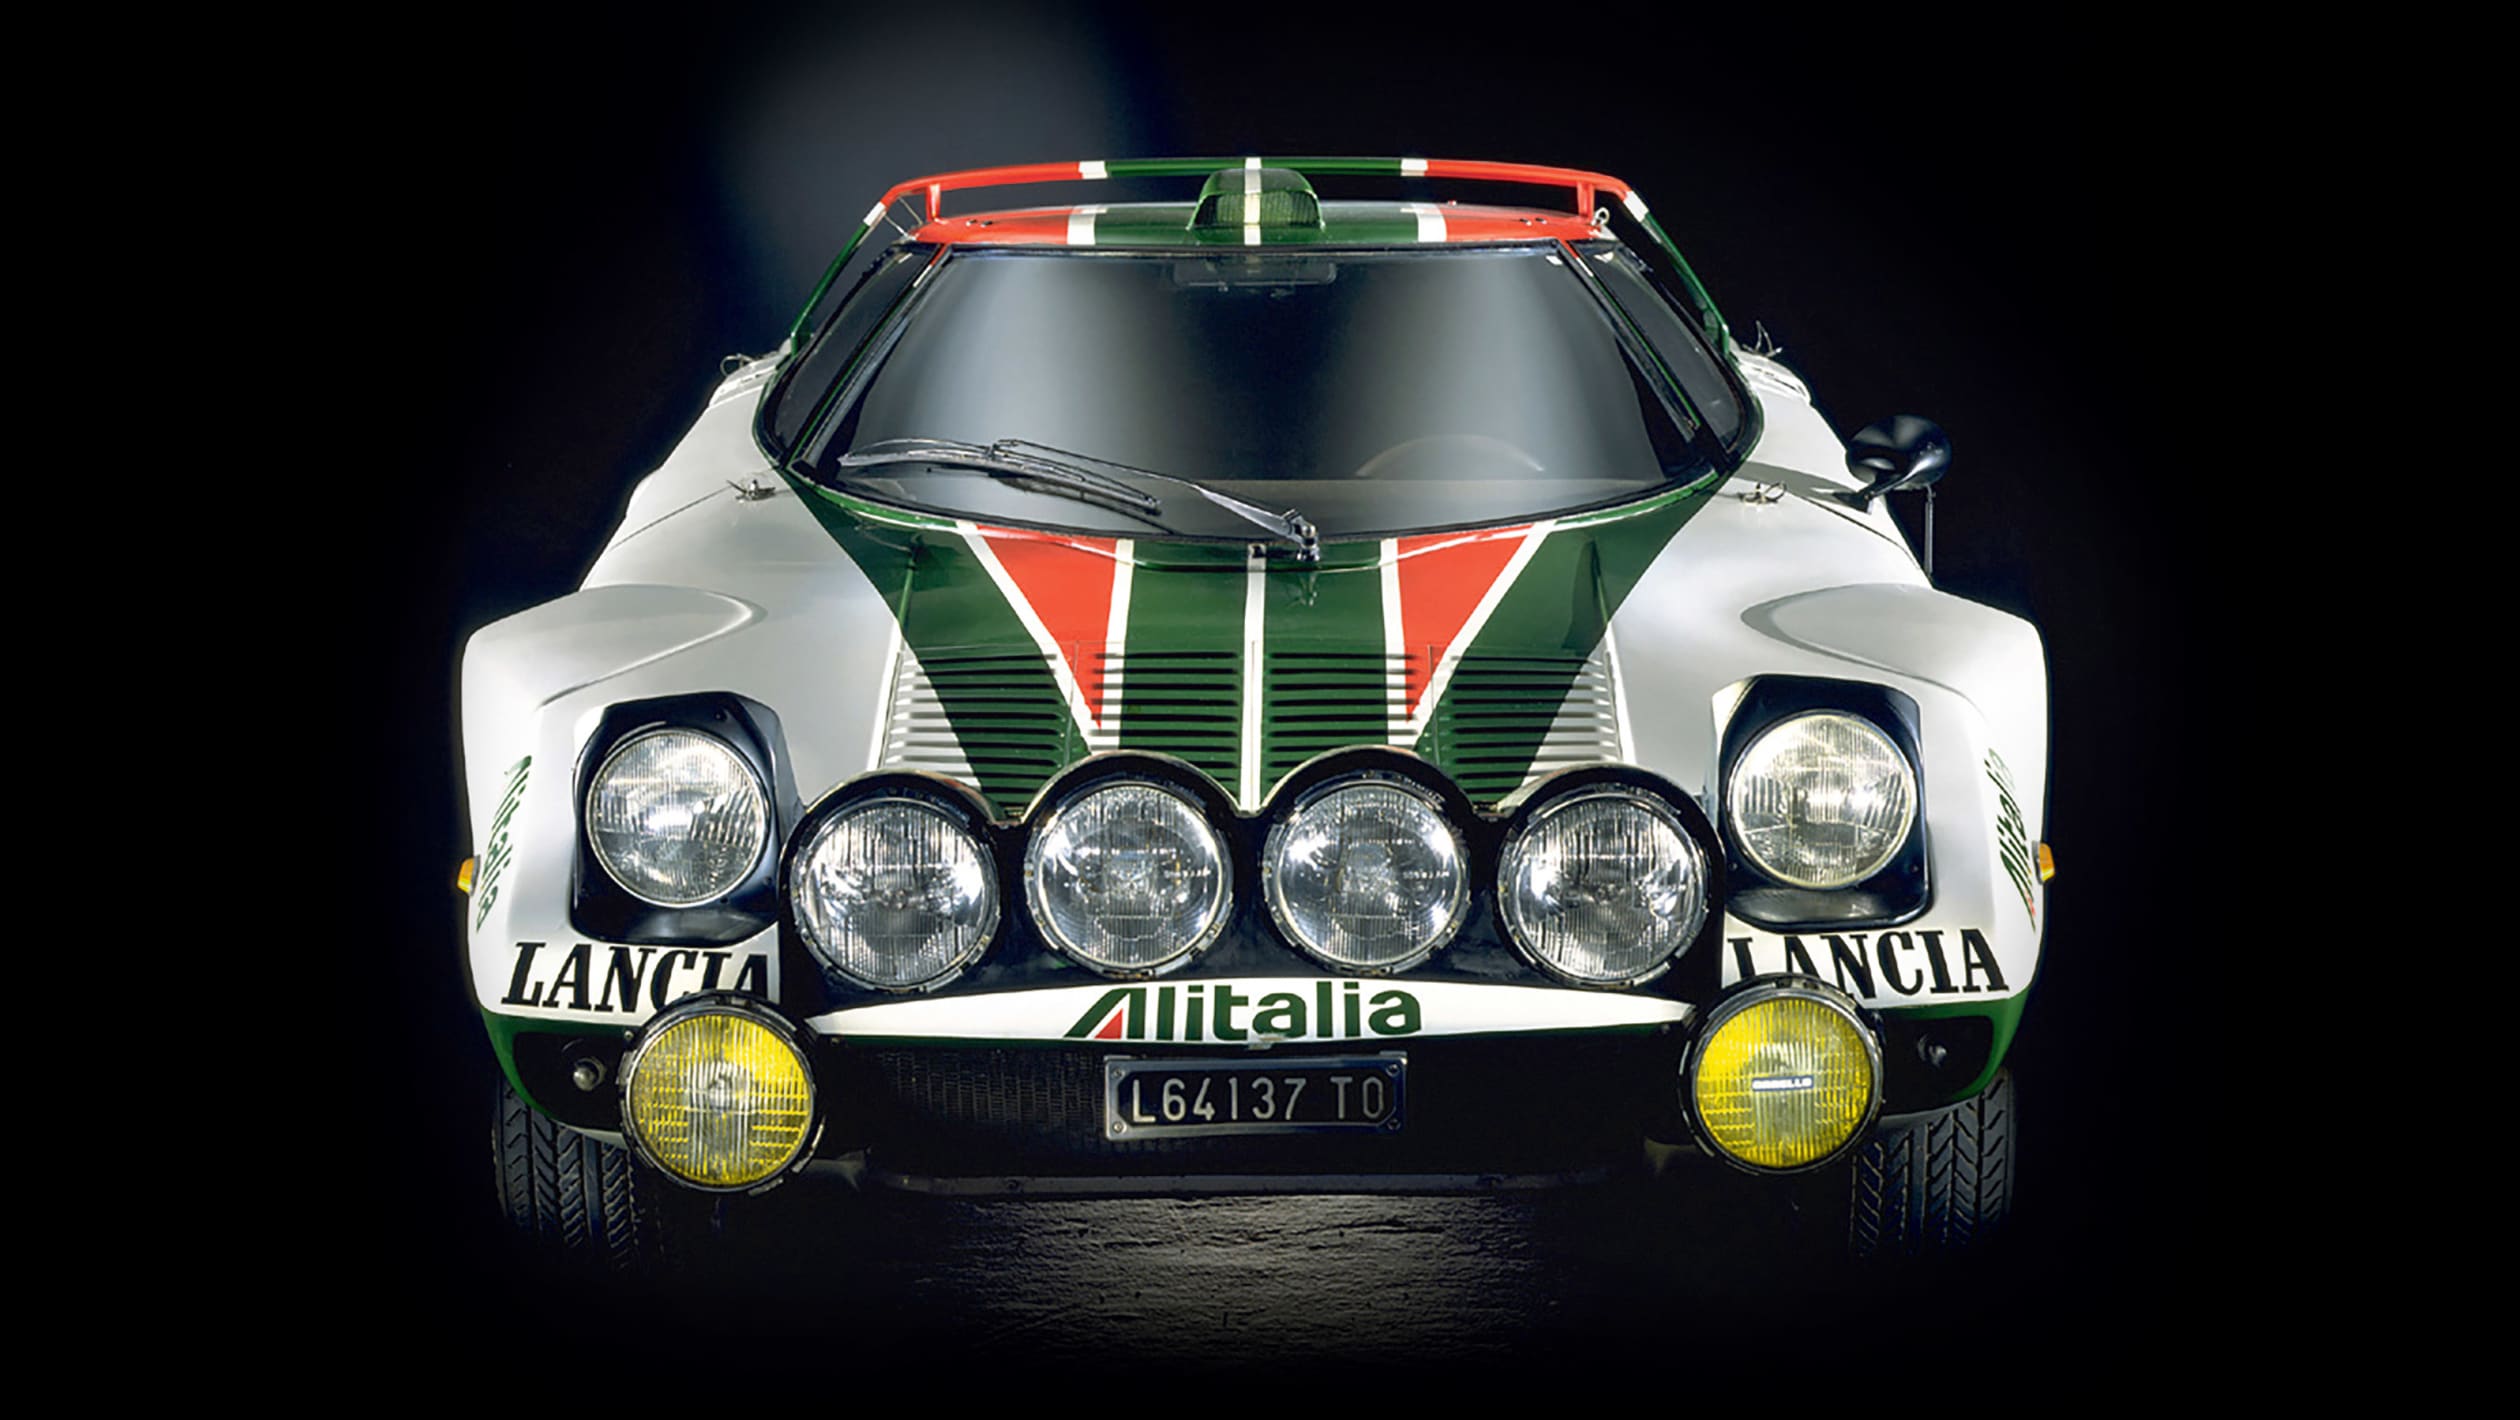 Most beautiful classic race cars